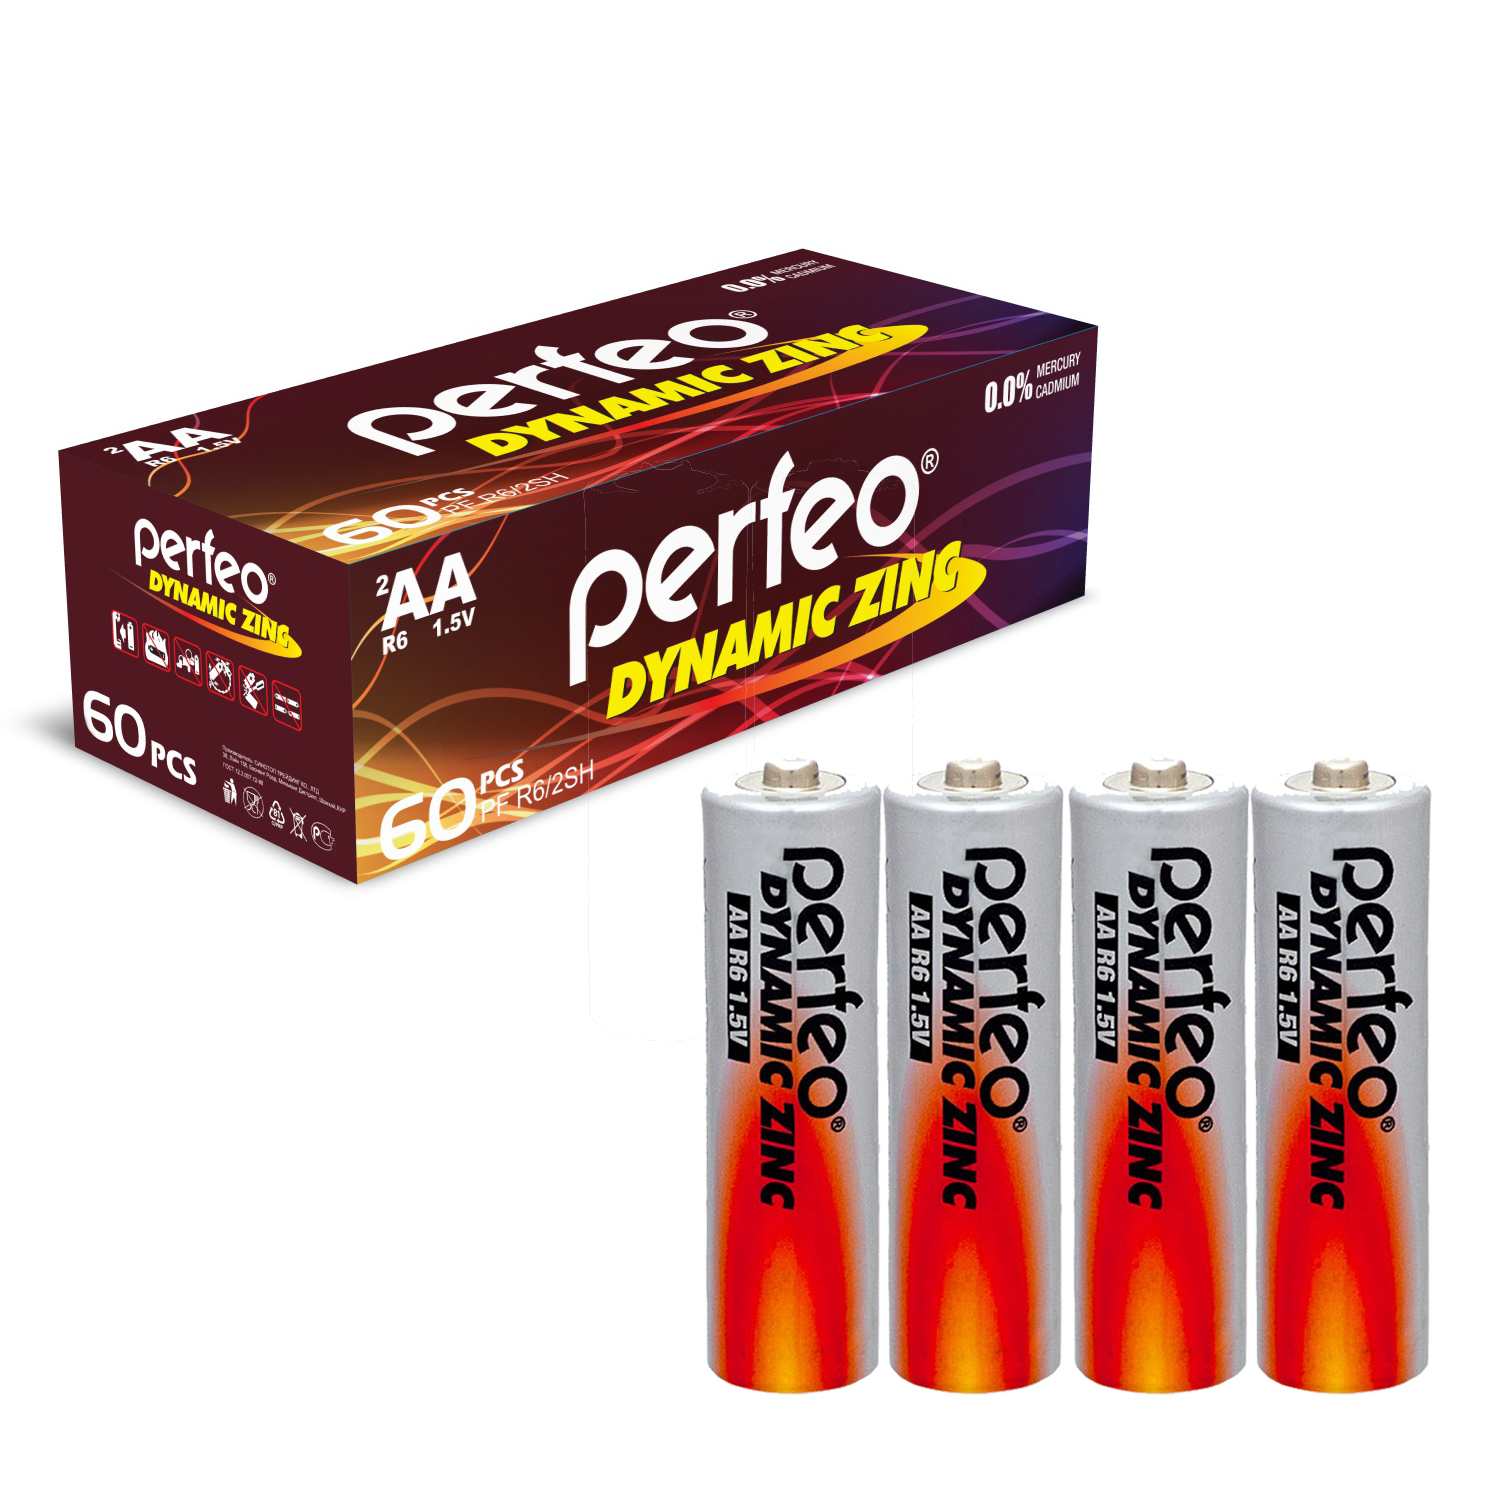 Батарейка Perfeo R6/4SH Dynamic Zinc 60 шт батарейка perfeo r6 4sh dynamic zinc 60 шт